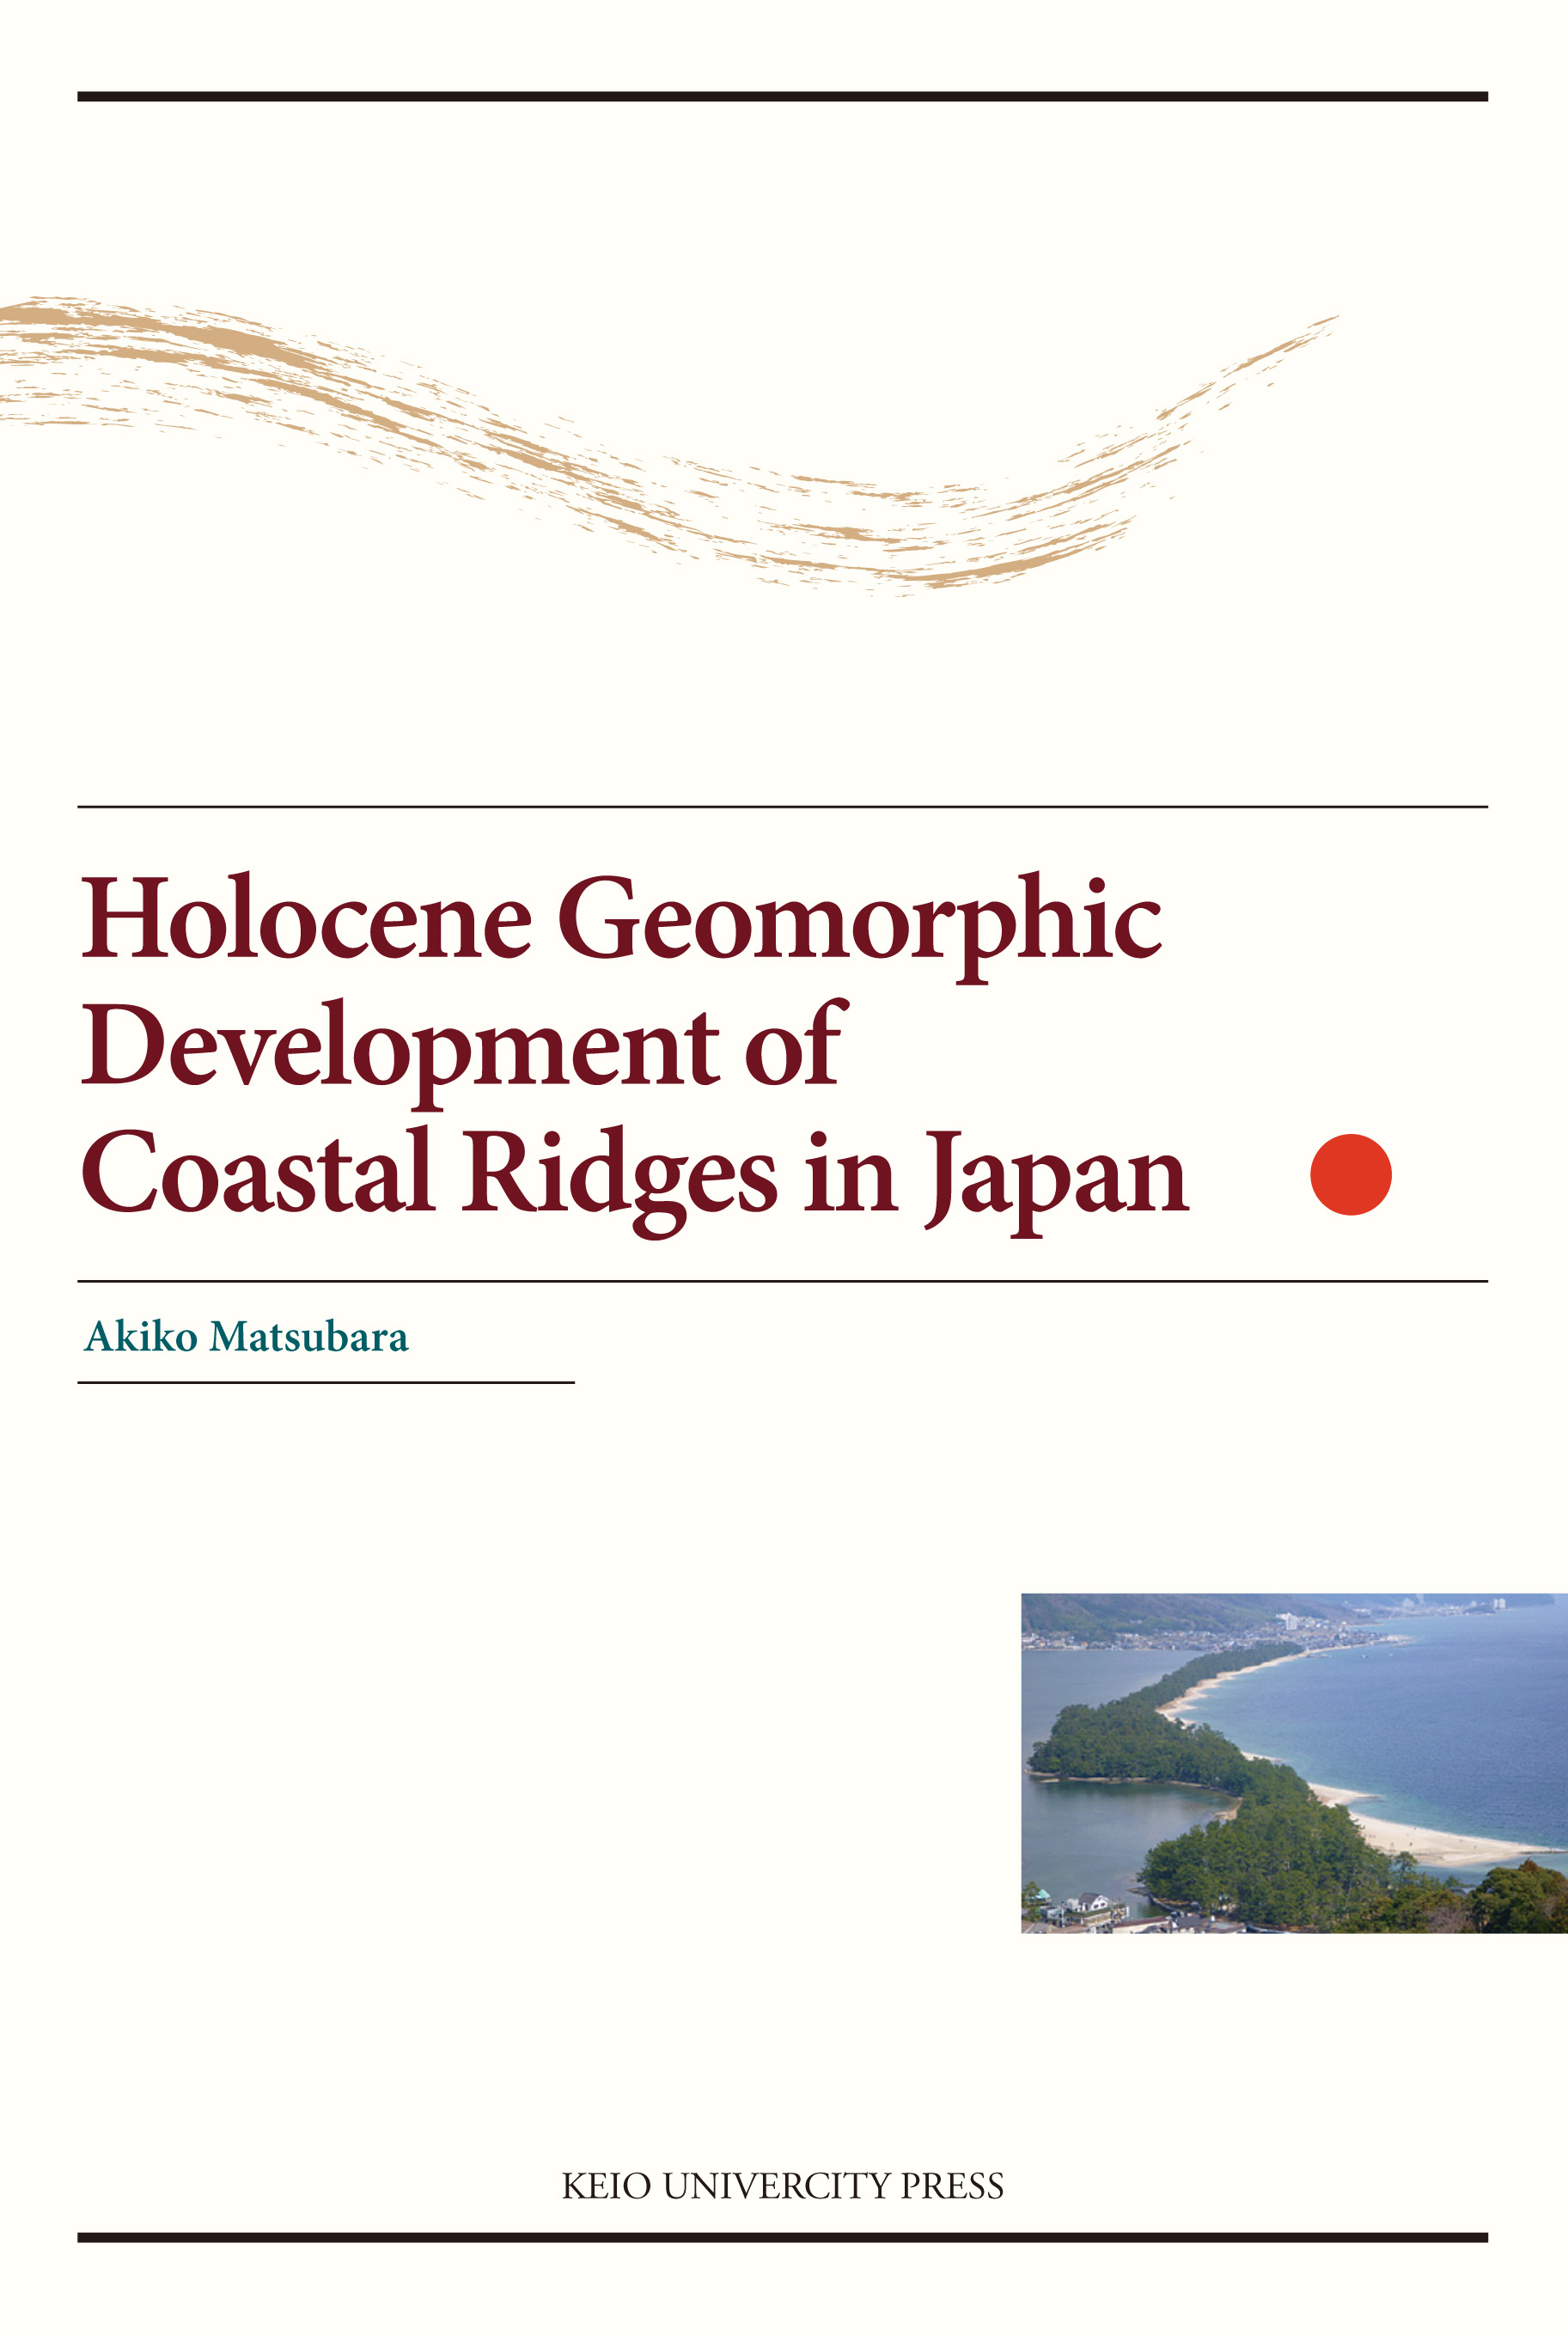 Holocene Geomorphic Development of Coastal Ridges in Japanの商品画像